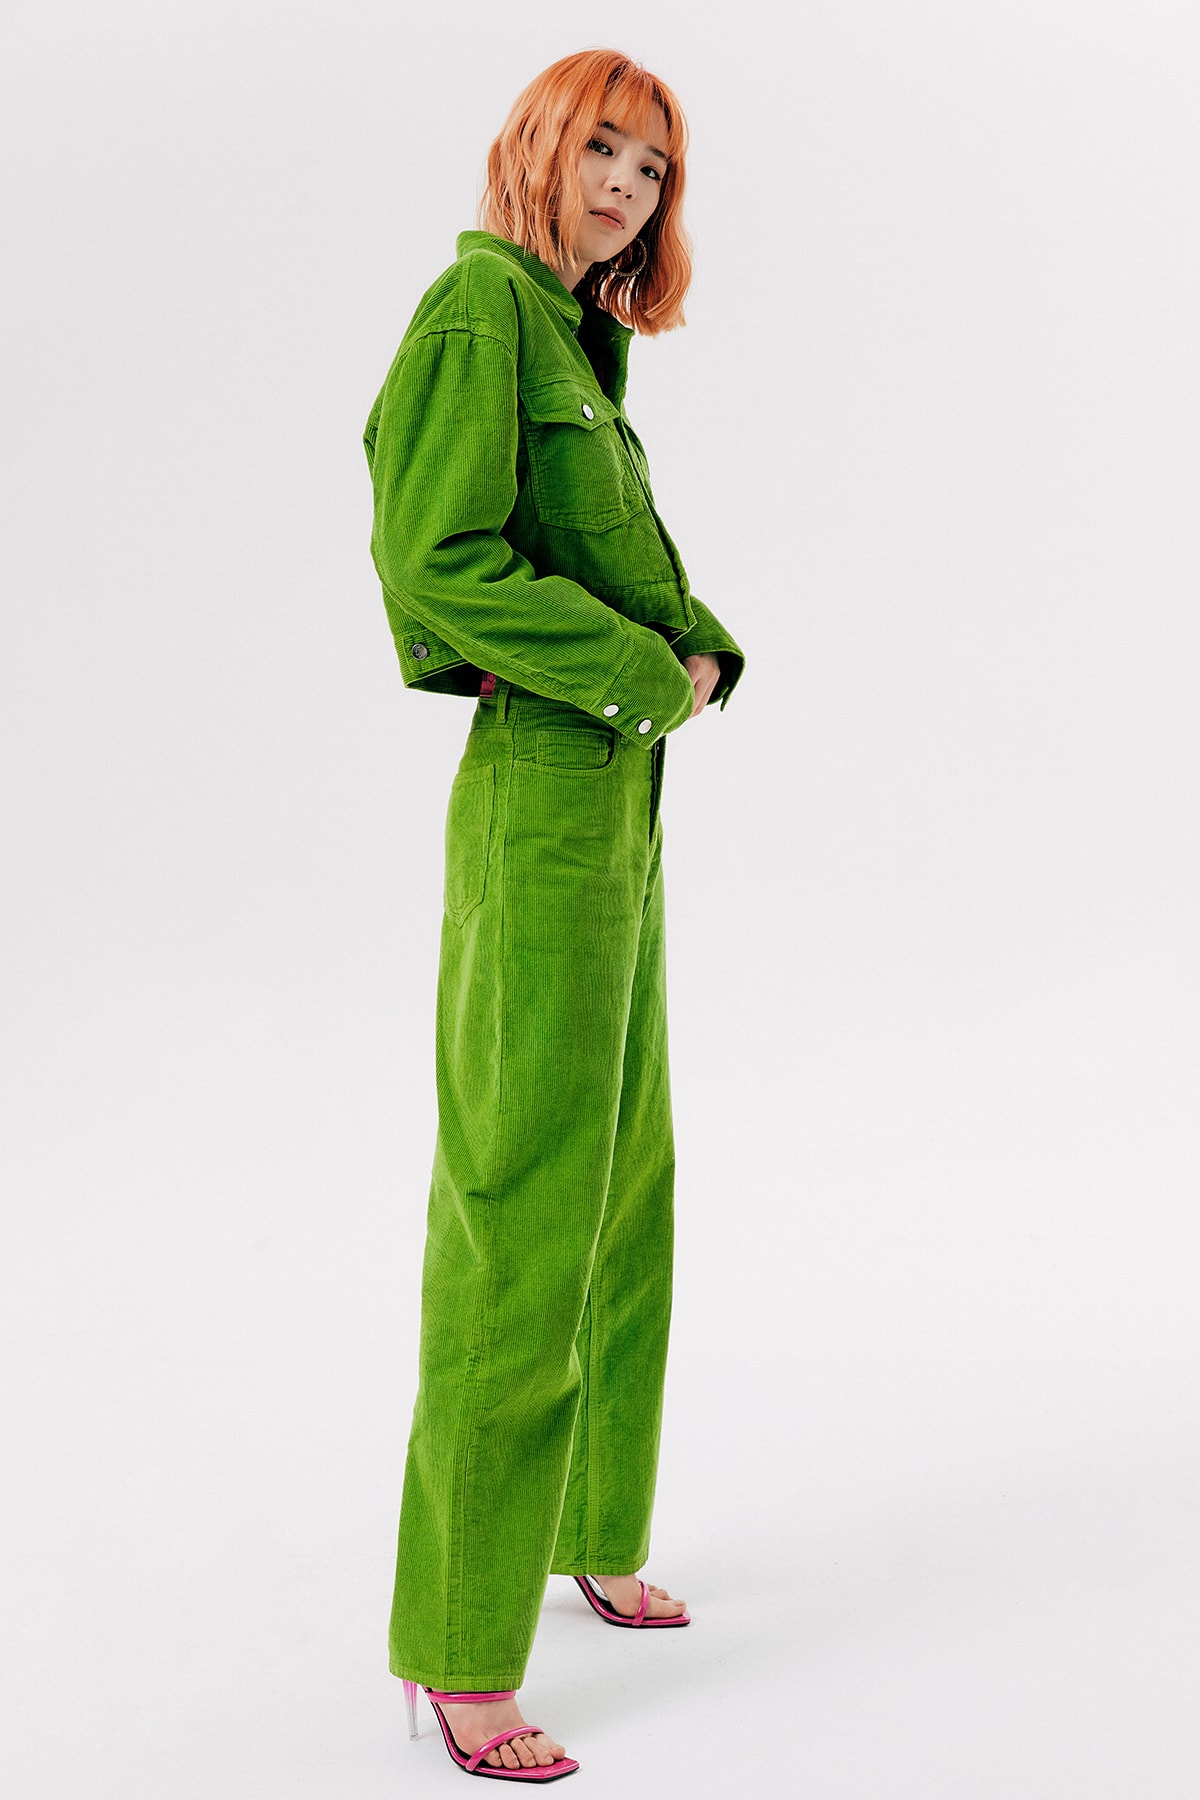 IRENEISGOOD Label Fall/Winter 2020 Collection Lookbook Corduroy Jacket Pants Green